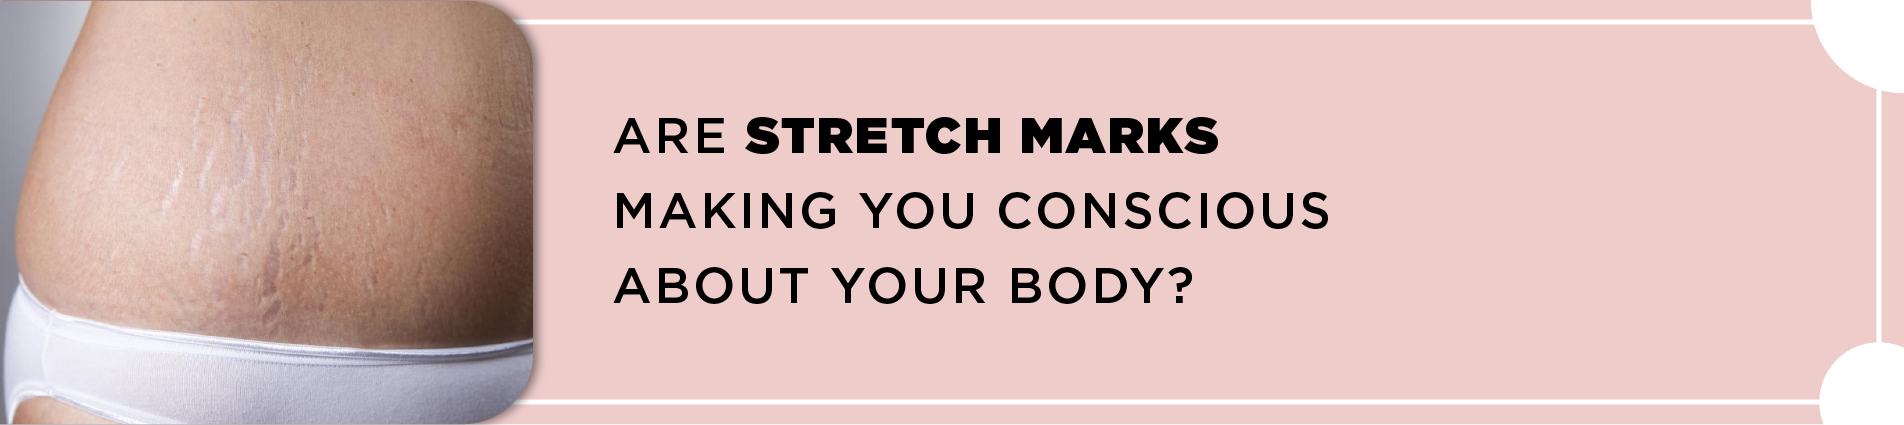 stretch marks treatment